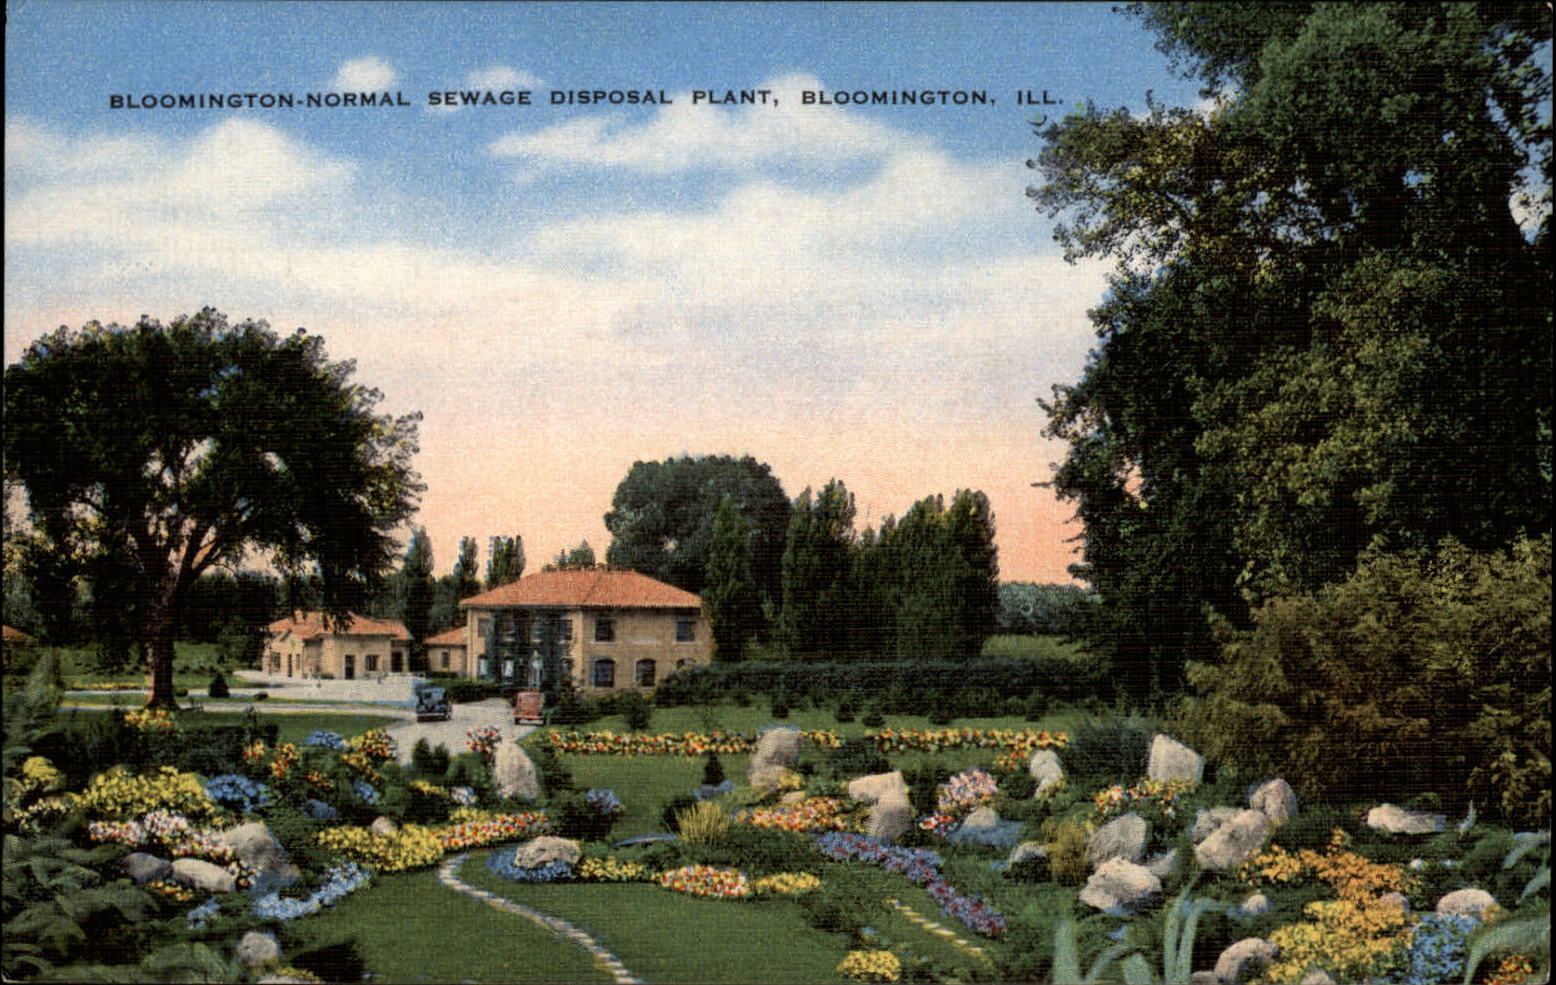 Bloomington Normal Sewage Disposal Plant Illinois garden ~ 1940s postcard